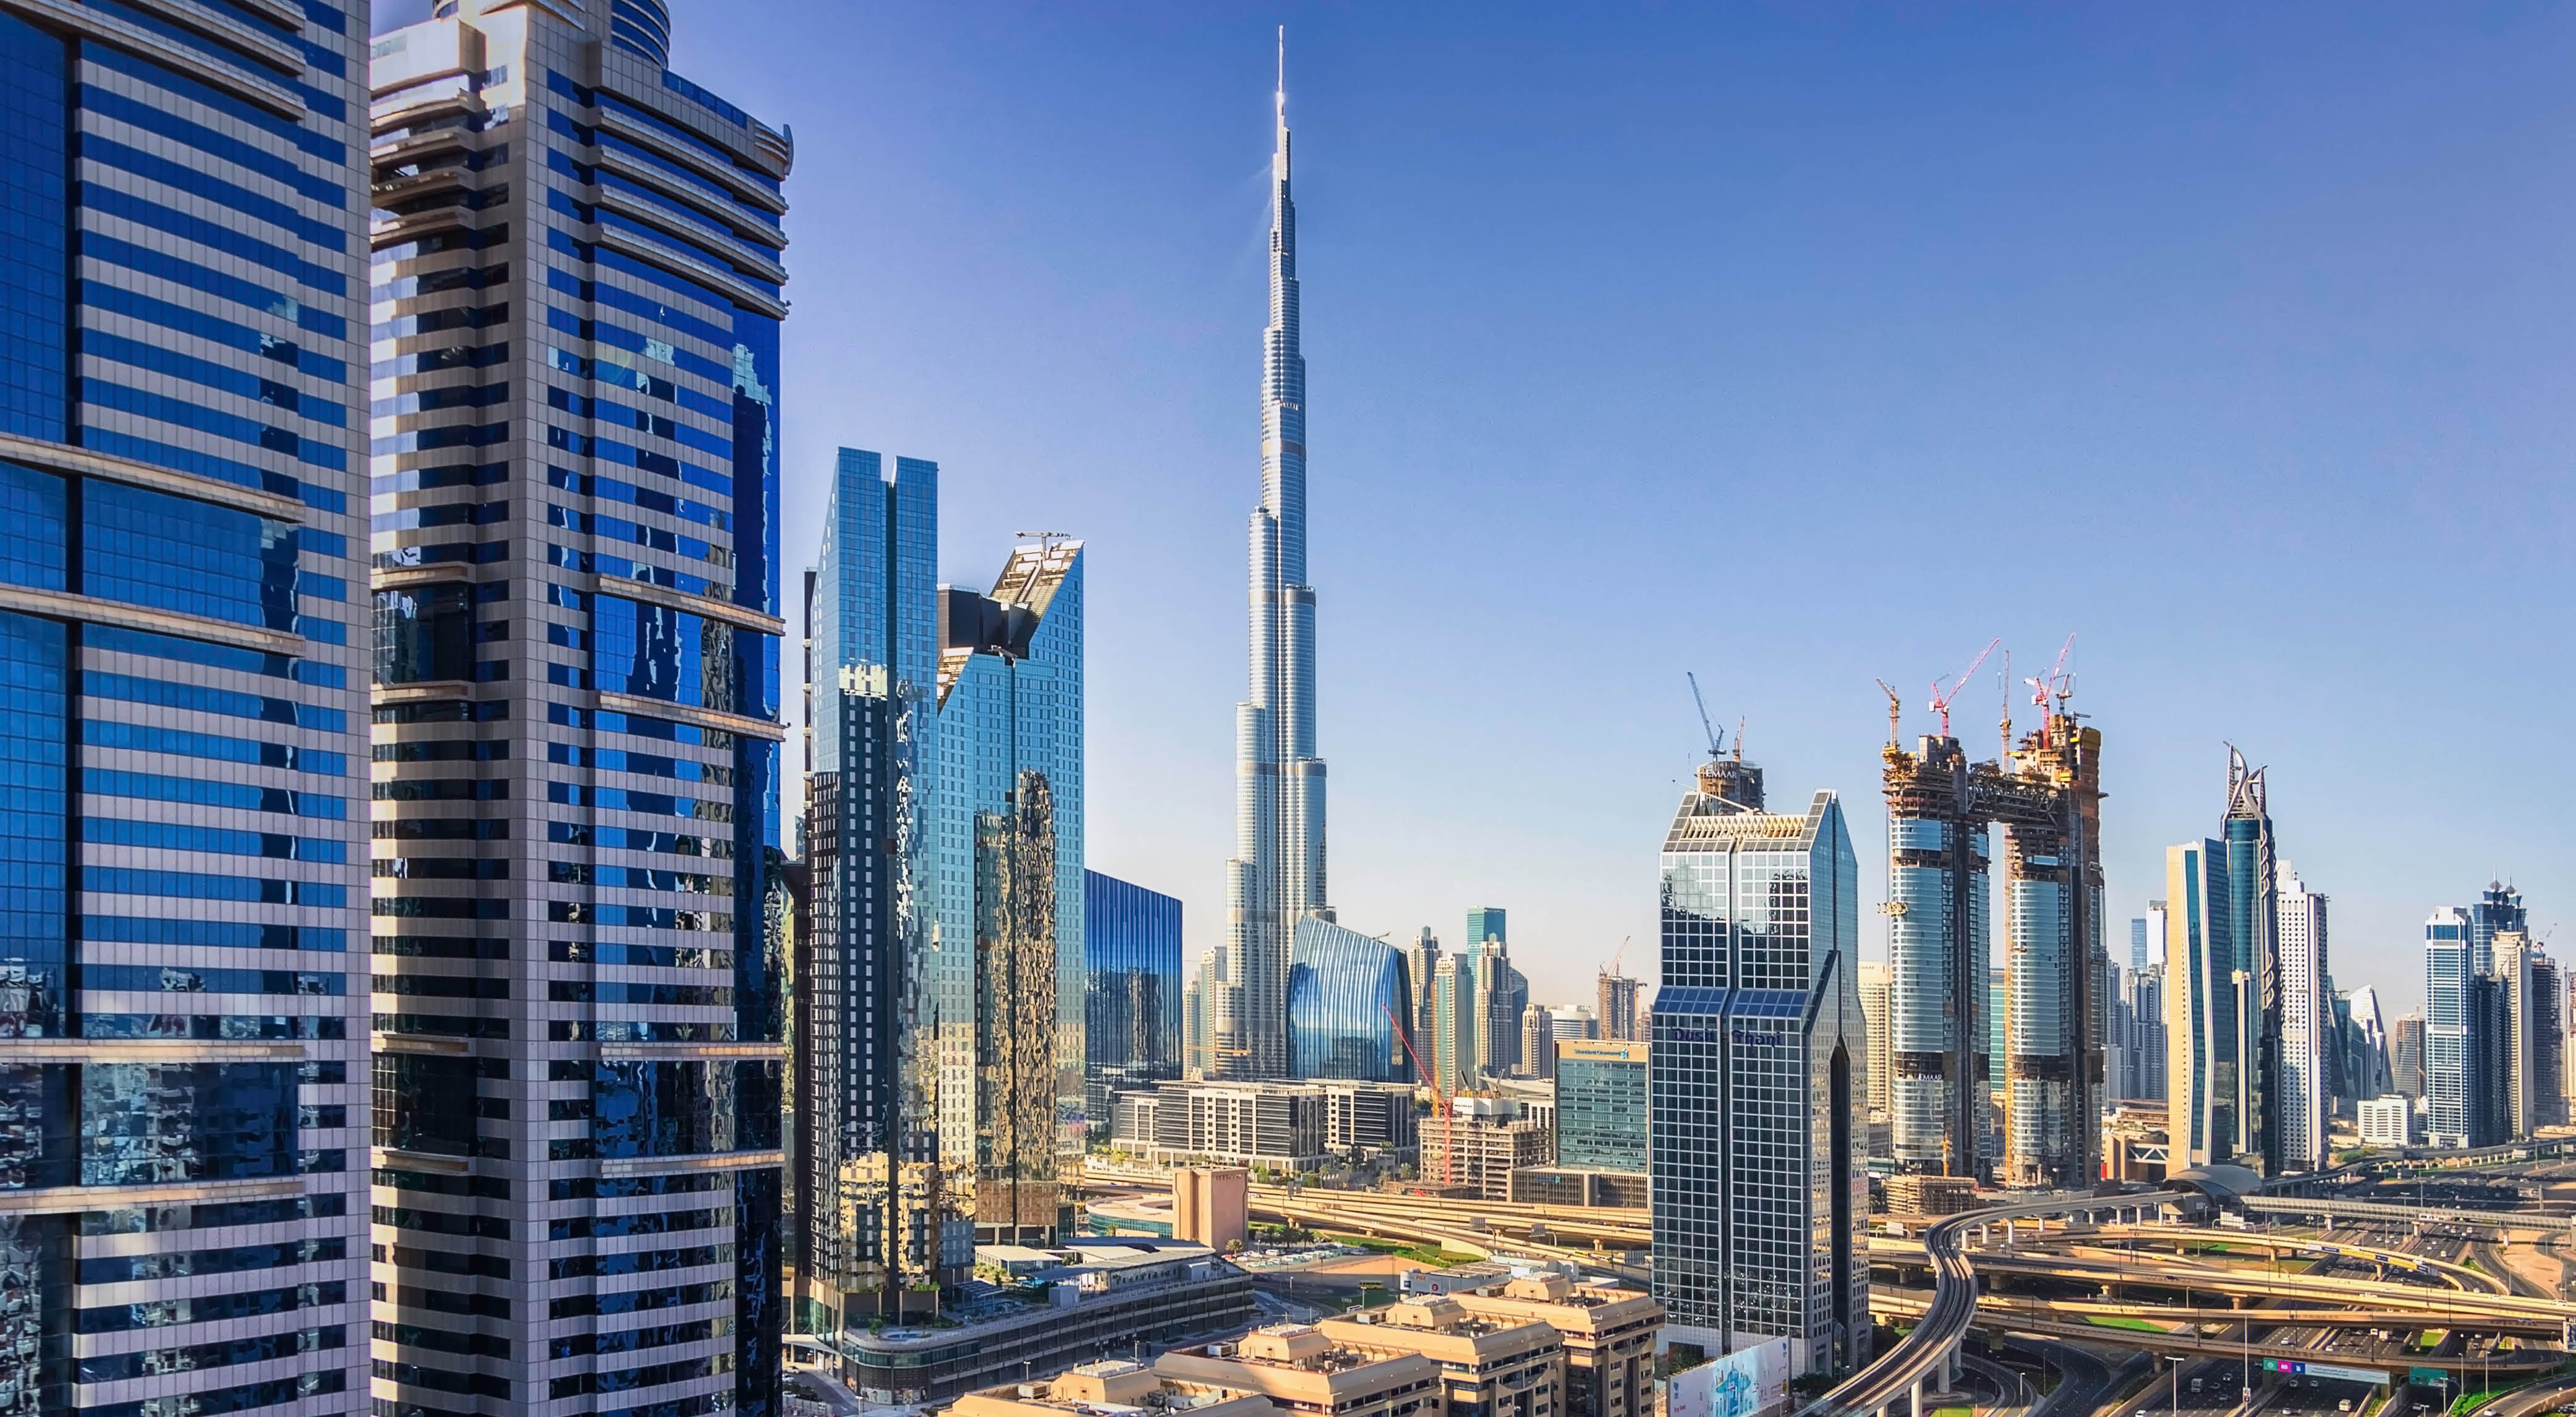 Dubai cityscapes - last minute getaways